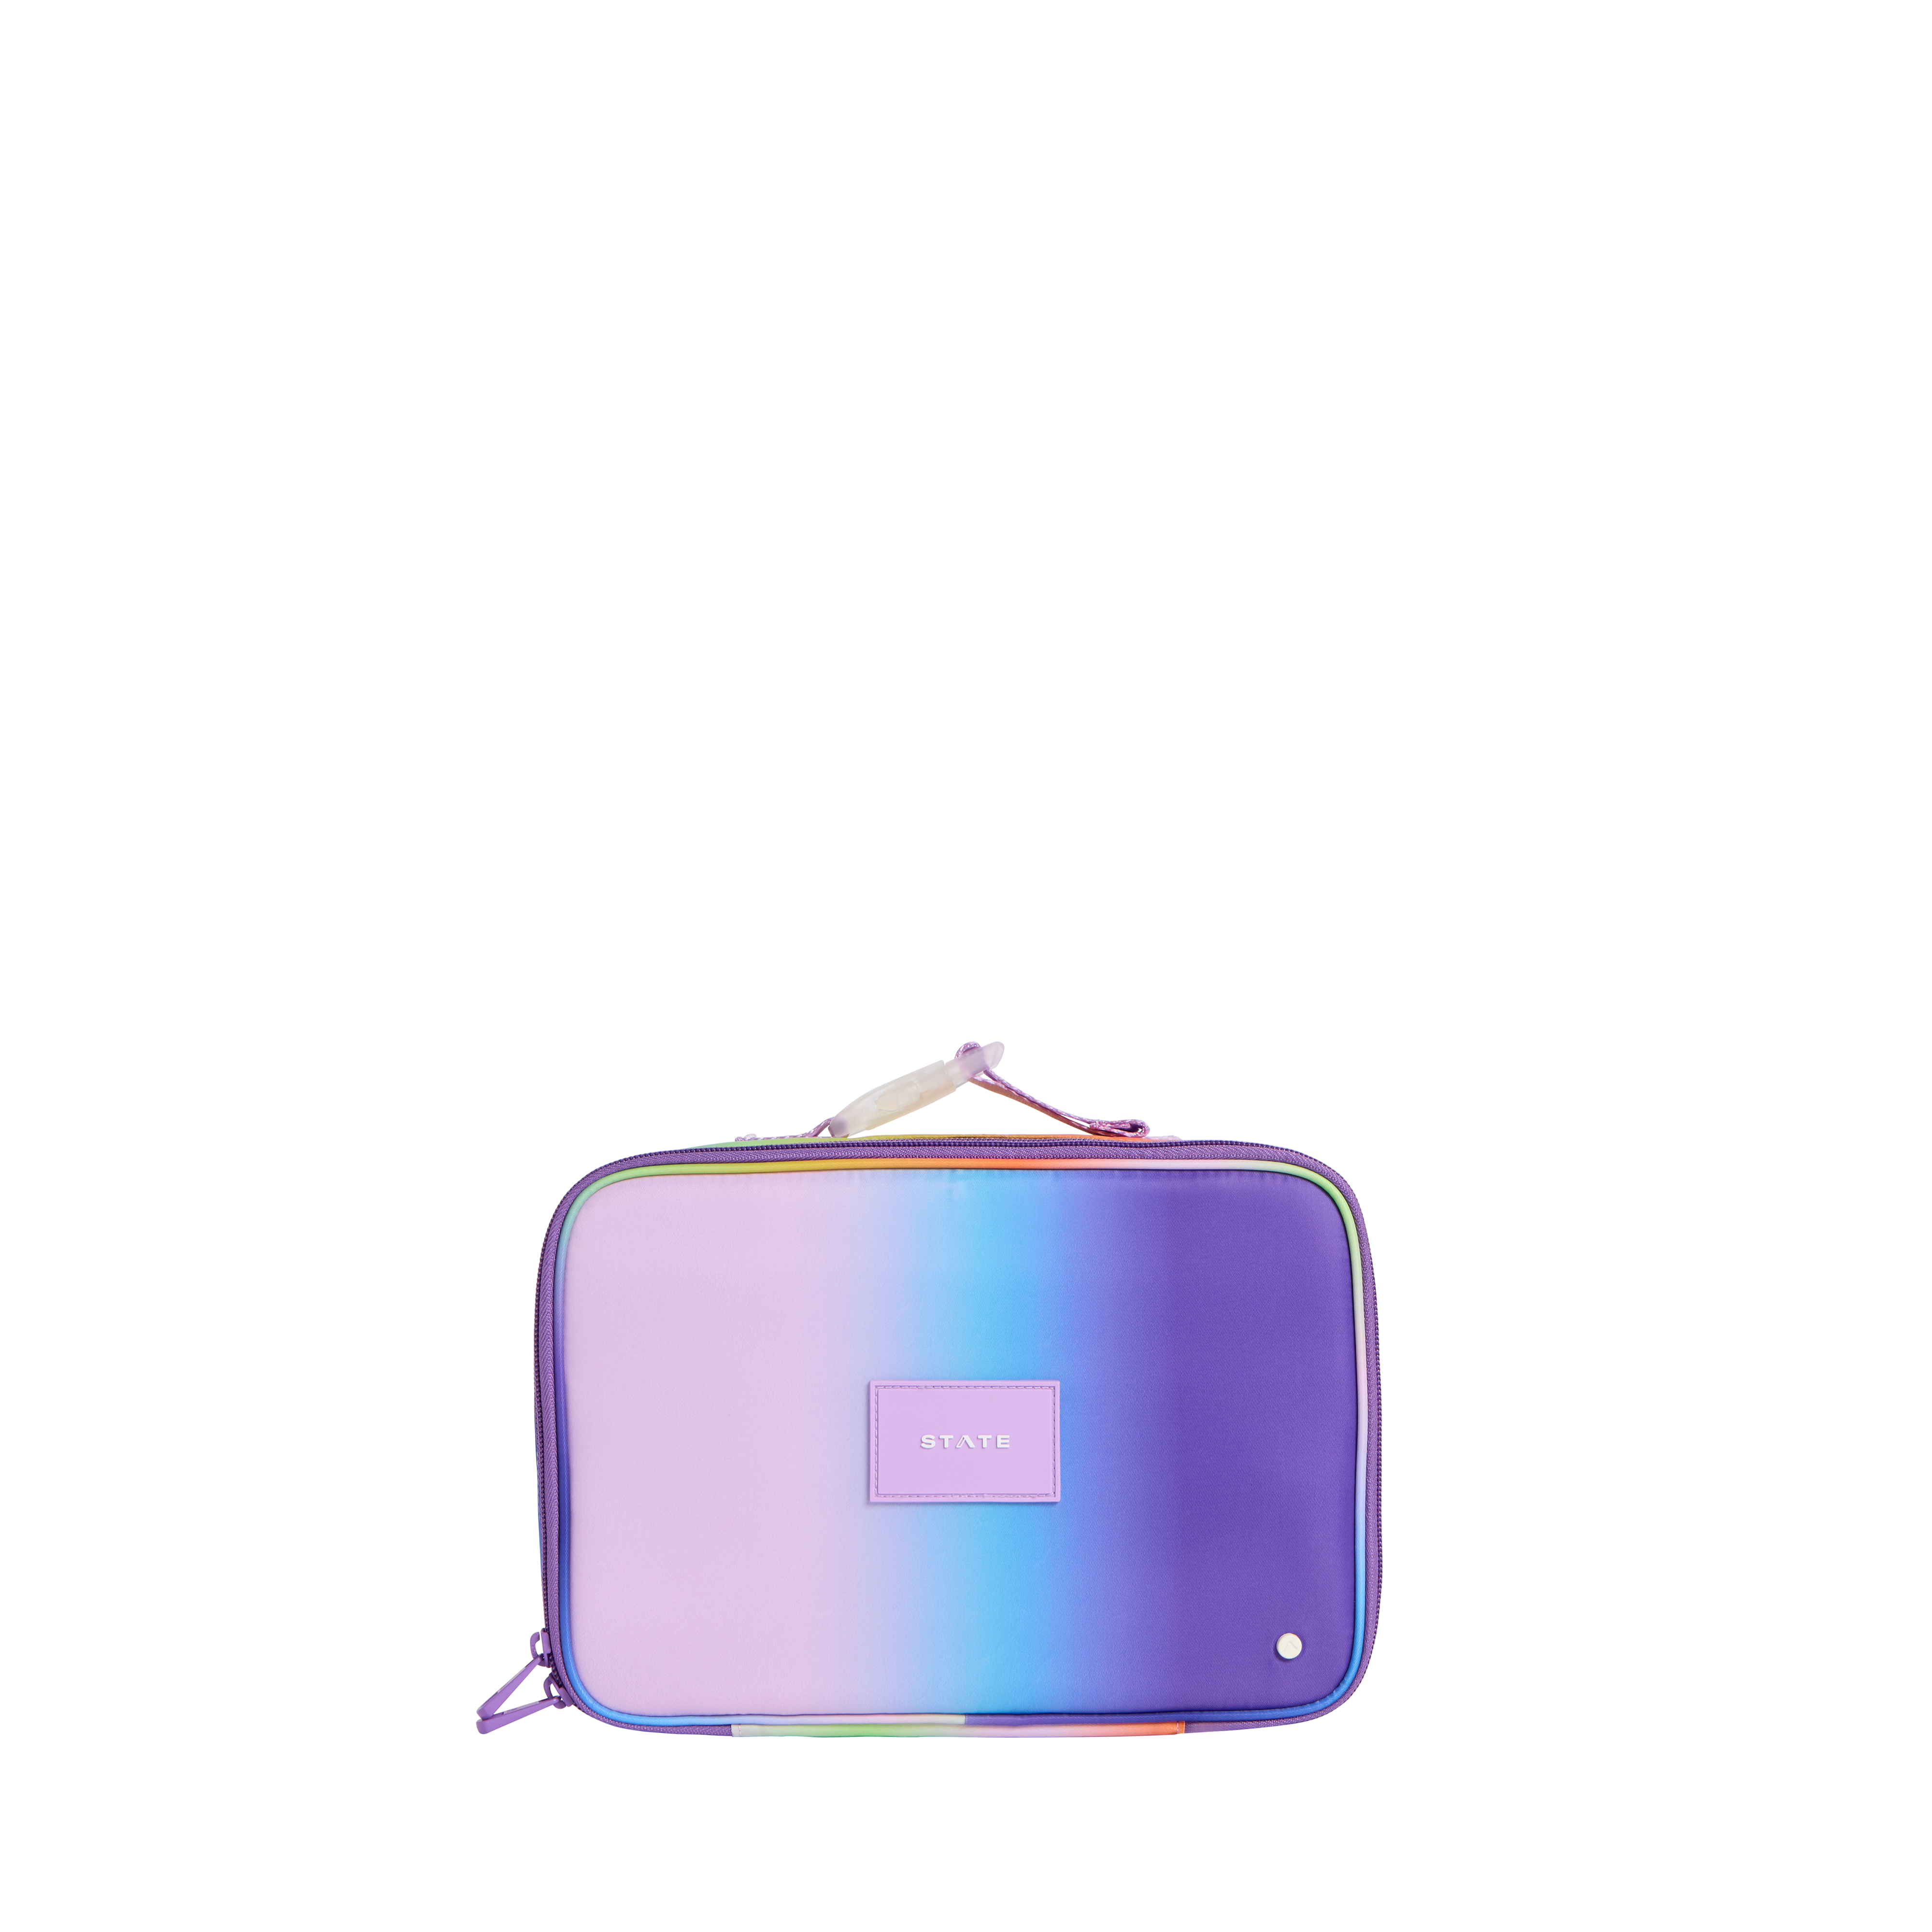 LV Louis Vuitton Monogram small lunch box bag handbag purse